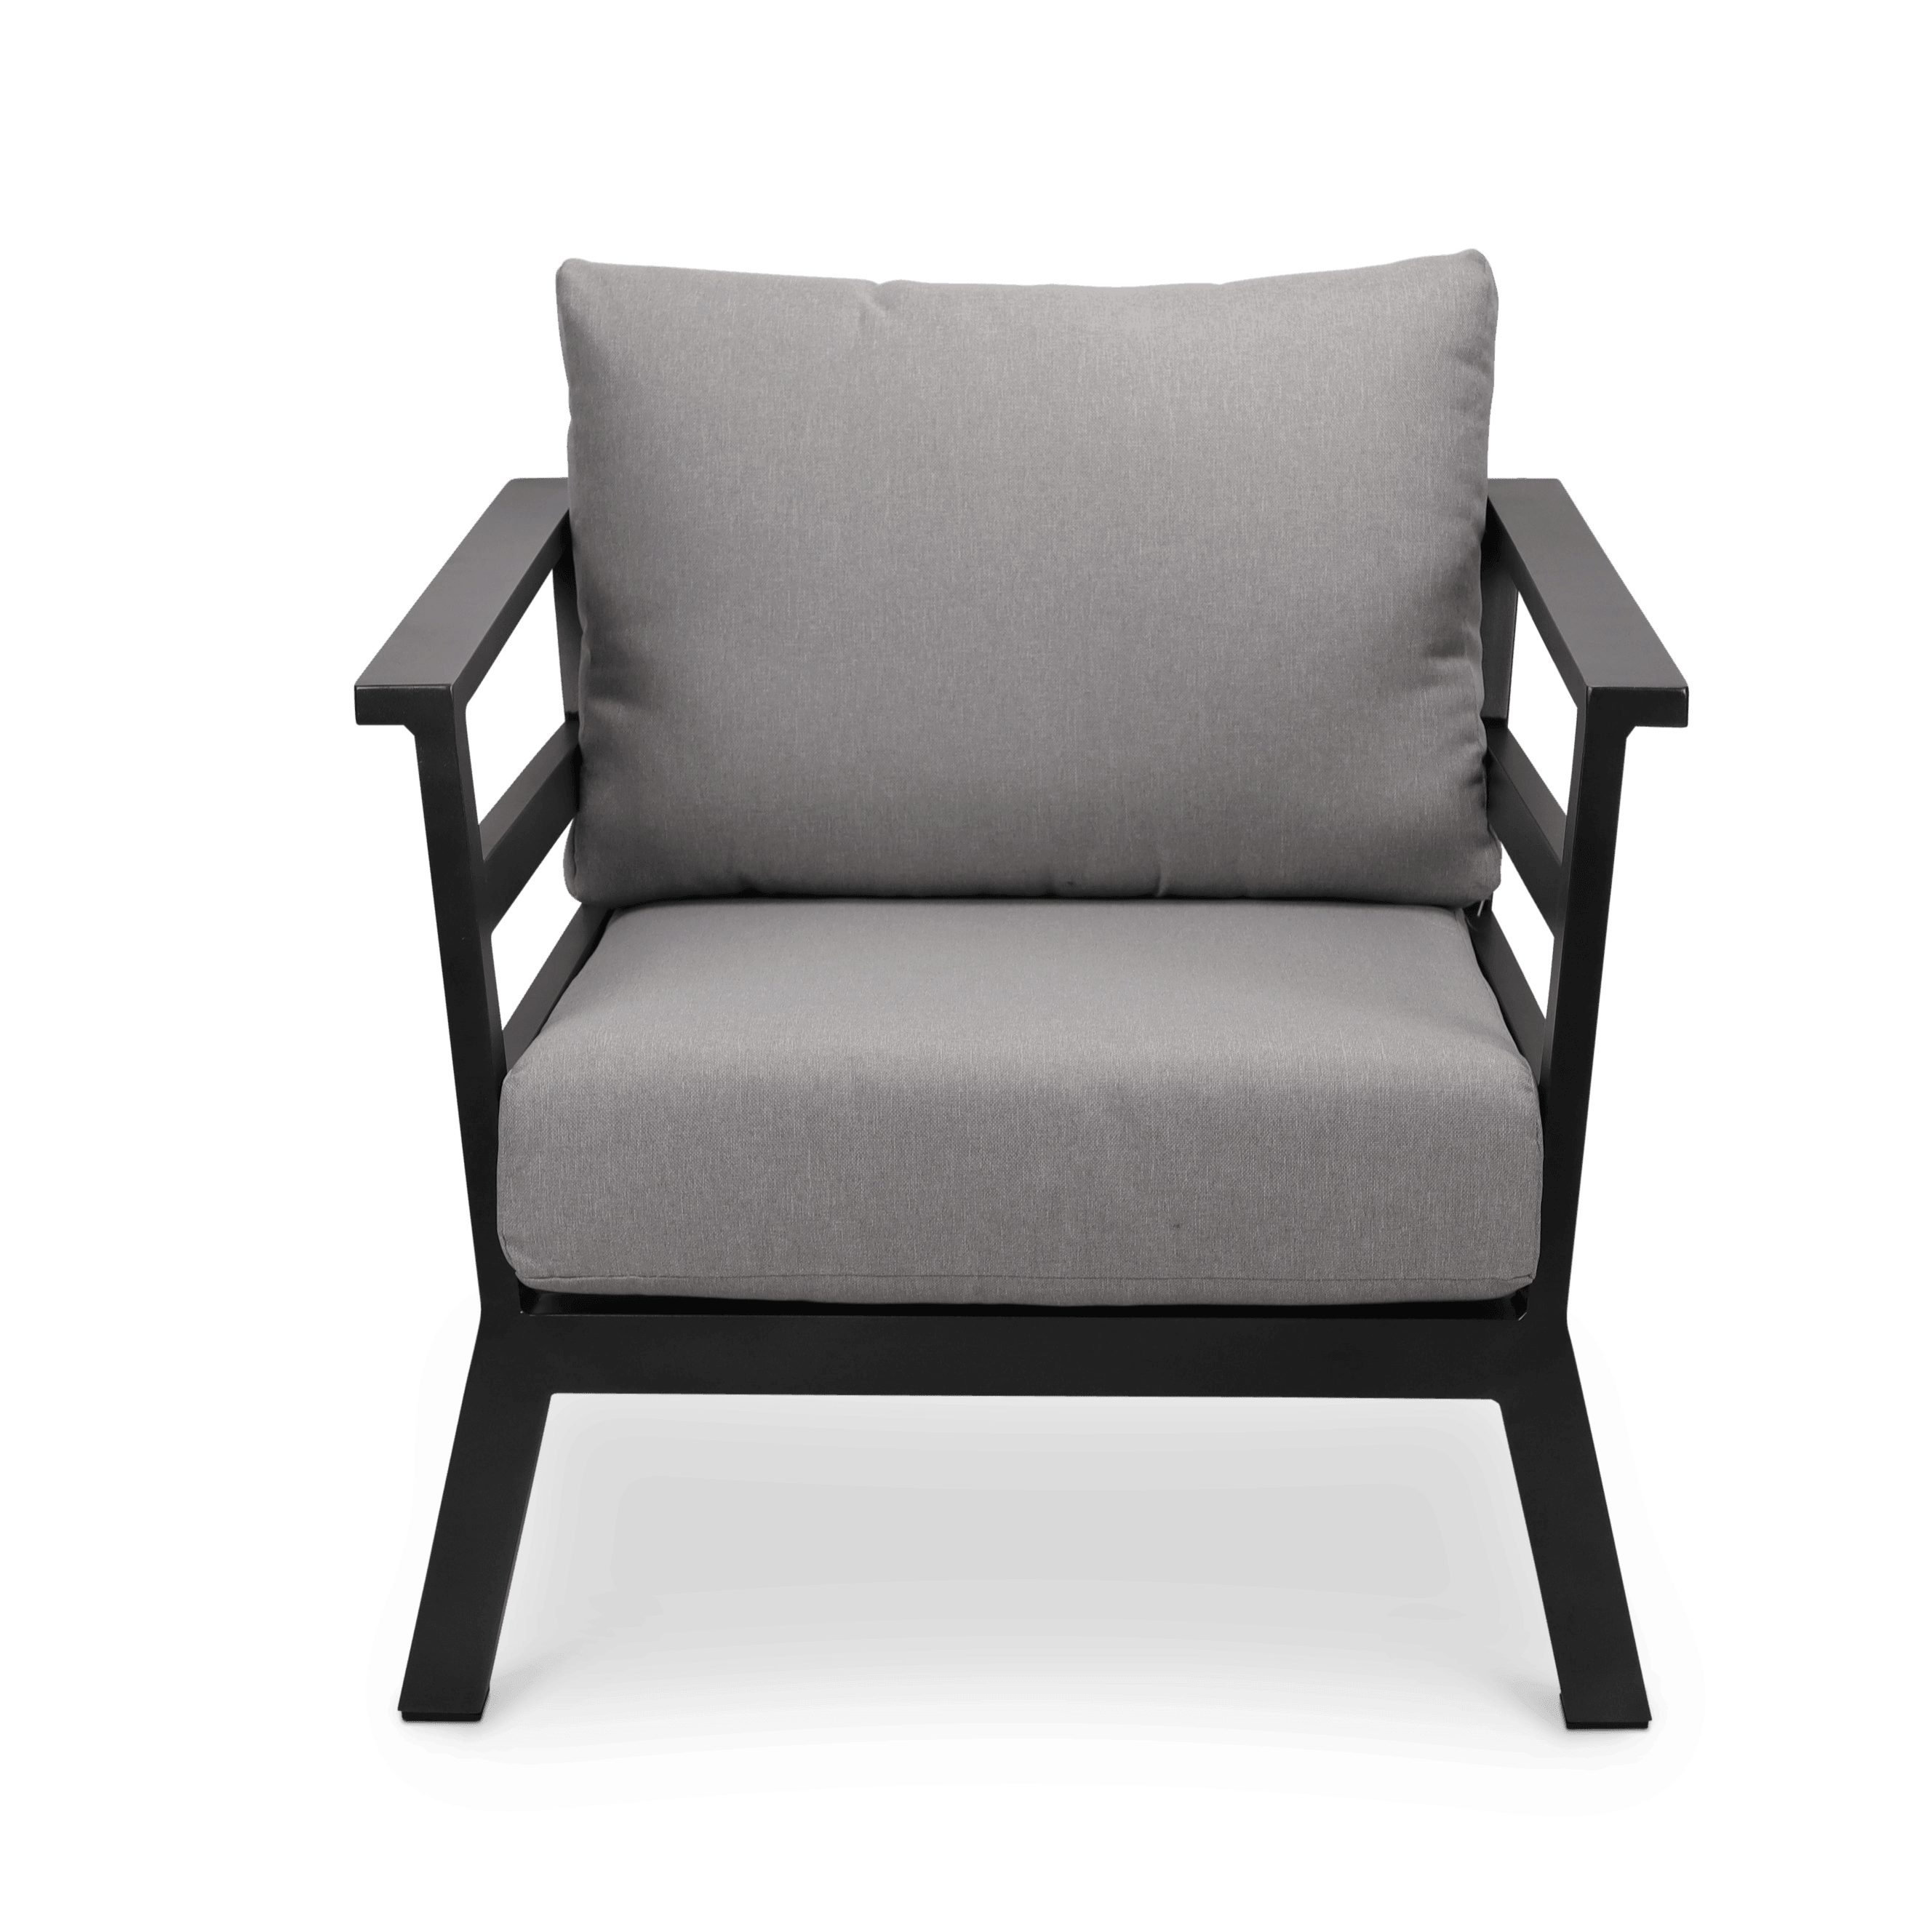 Aveiro Armchair in Gunmetal Grey with Stone Olefin Cushion - The Furniture Shack